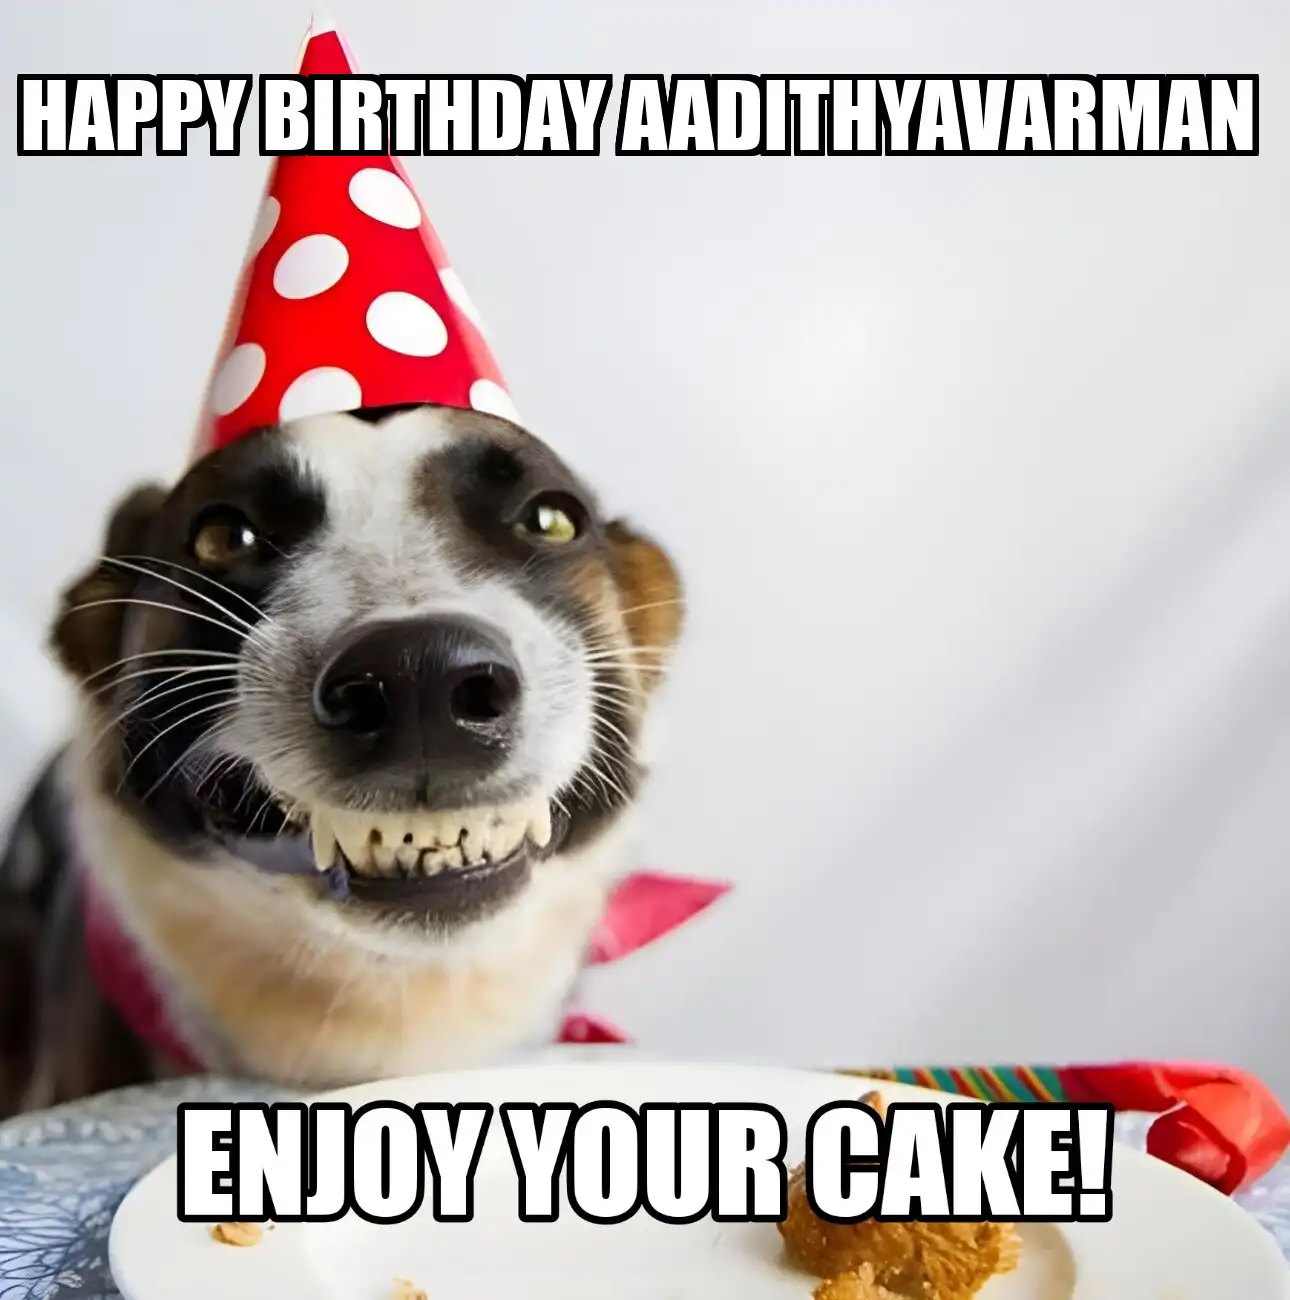 Happy Birthday Aadithyavarman Enjoy Your Cake Dog Meme